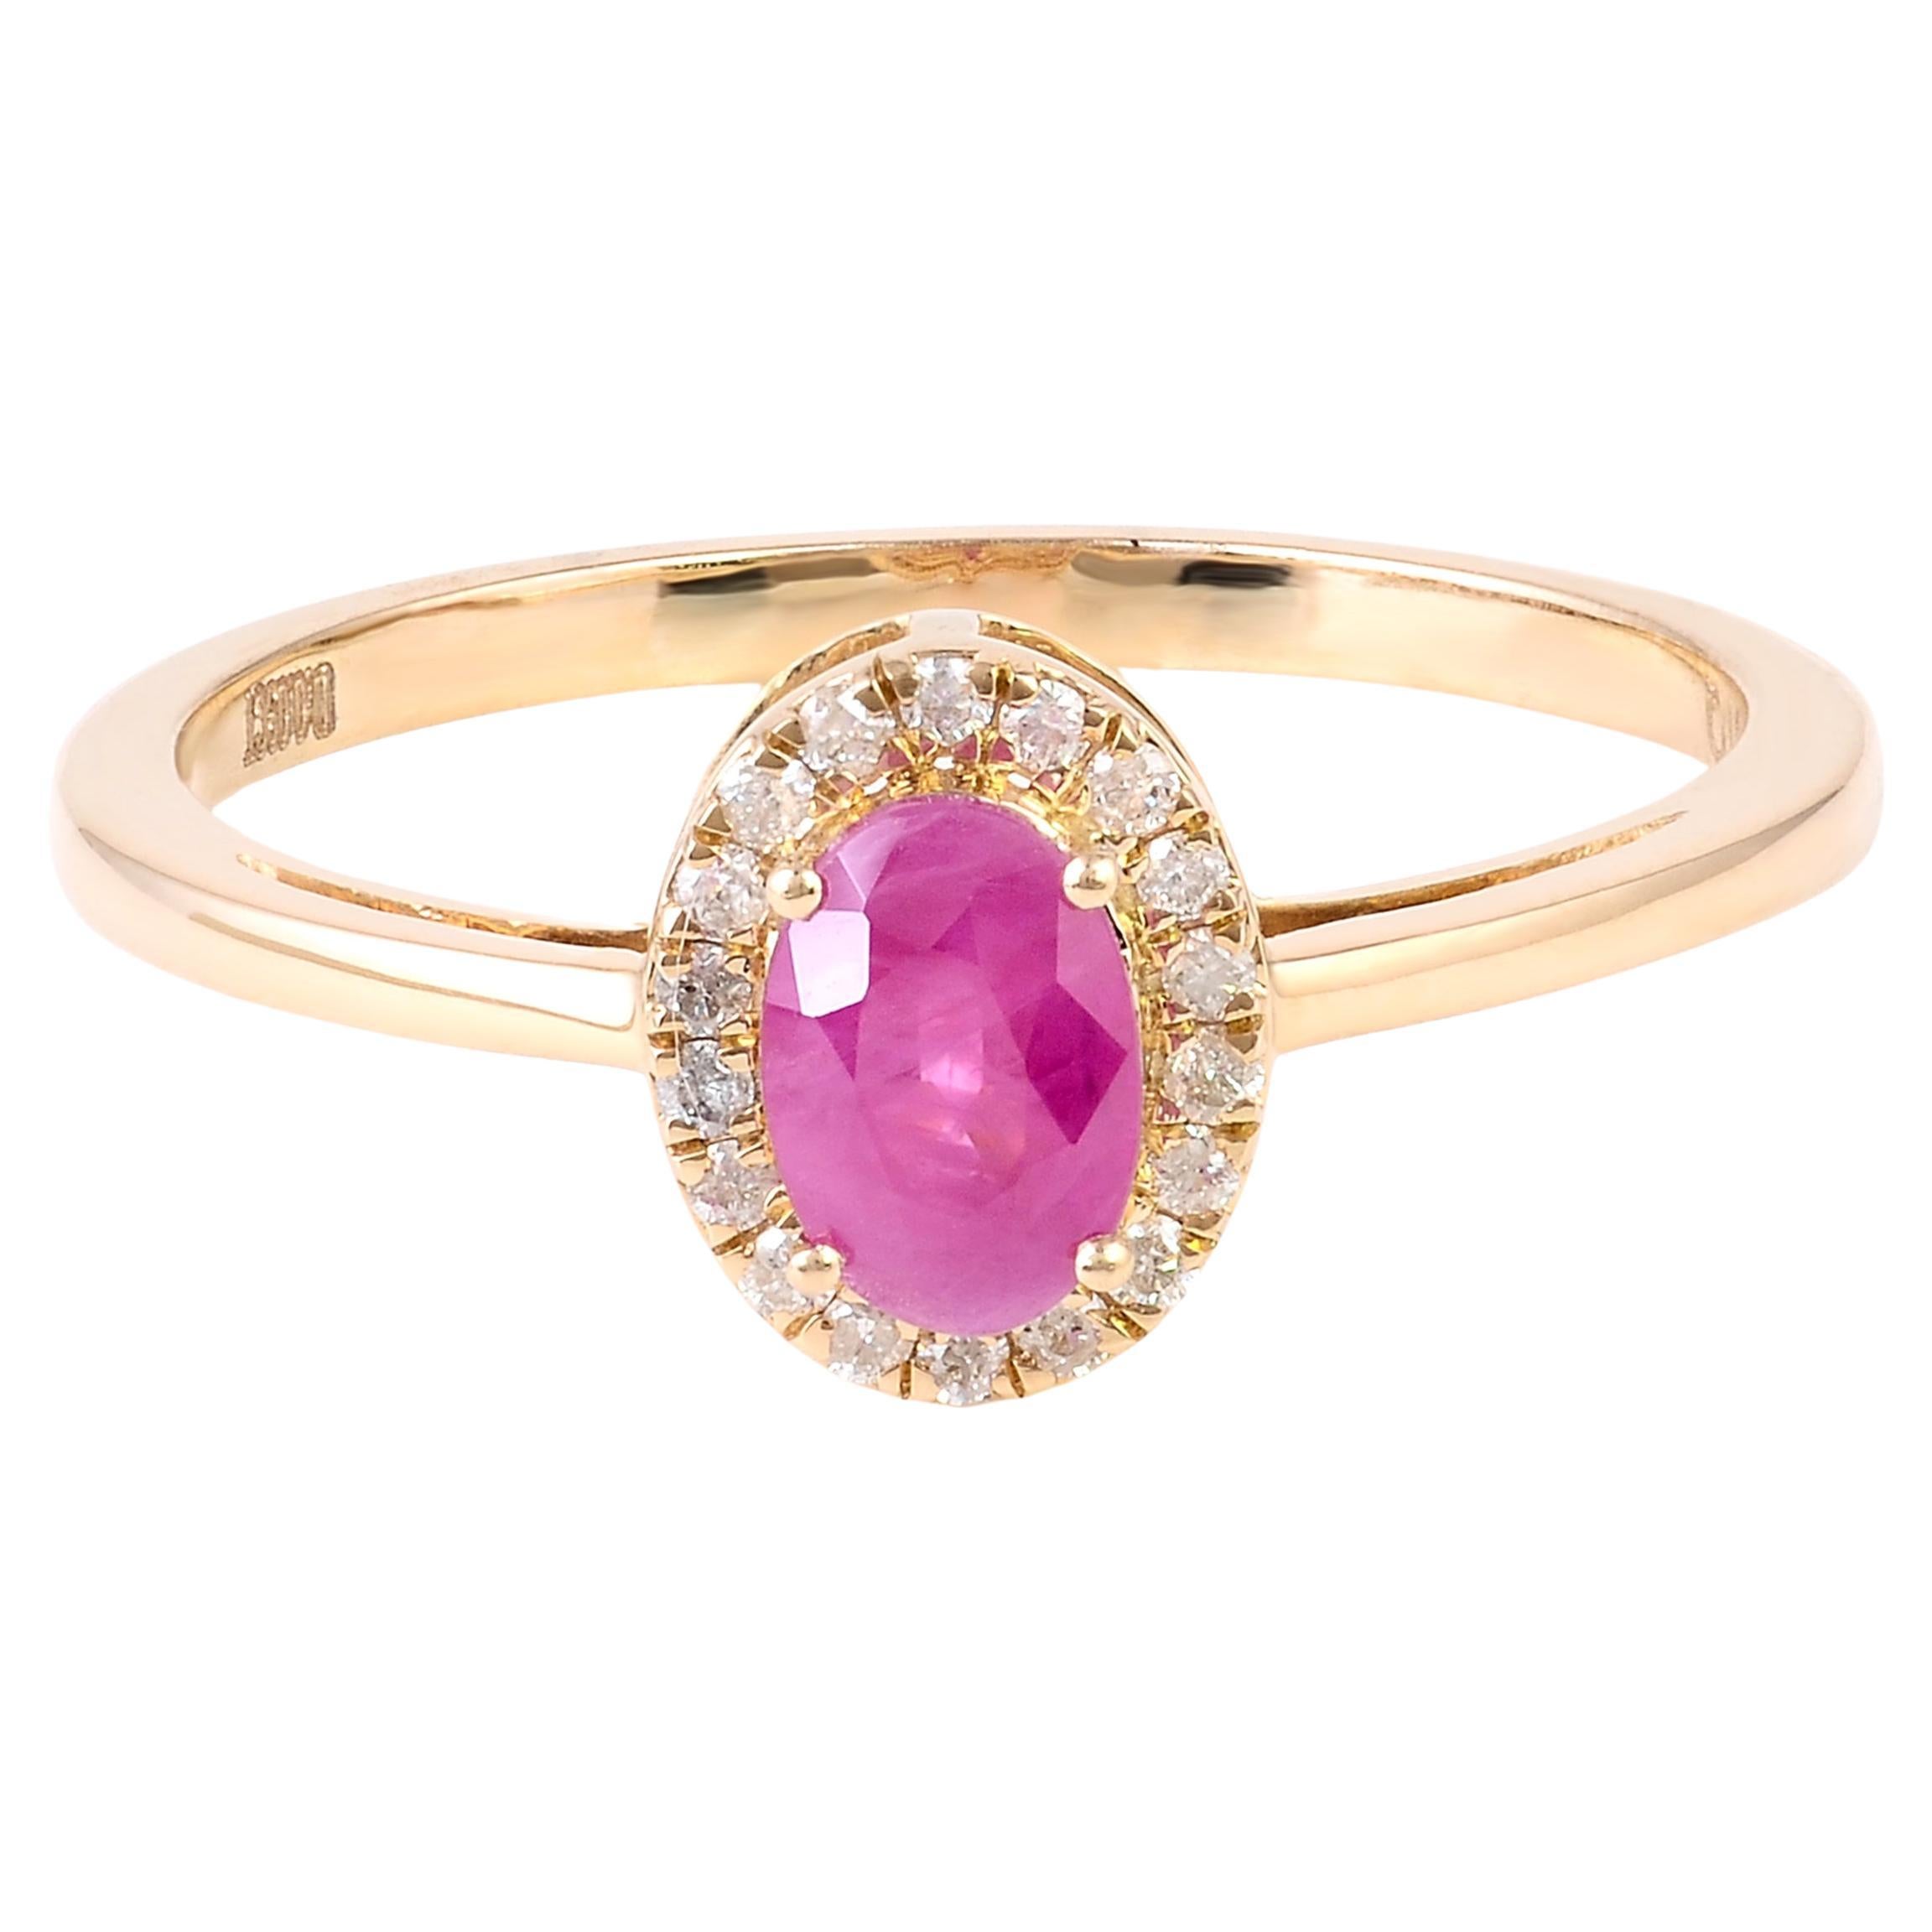 Elegant 14K Ruby & Diamond Cocktail Ring, Size 7 - Statement Jewelry Piece For Sale